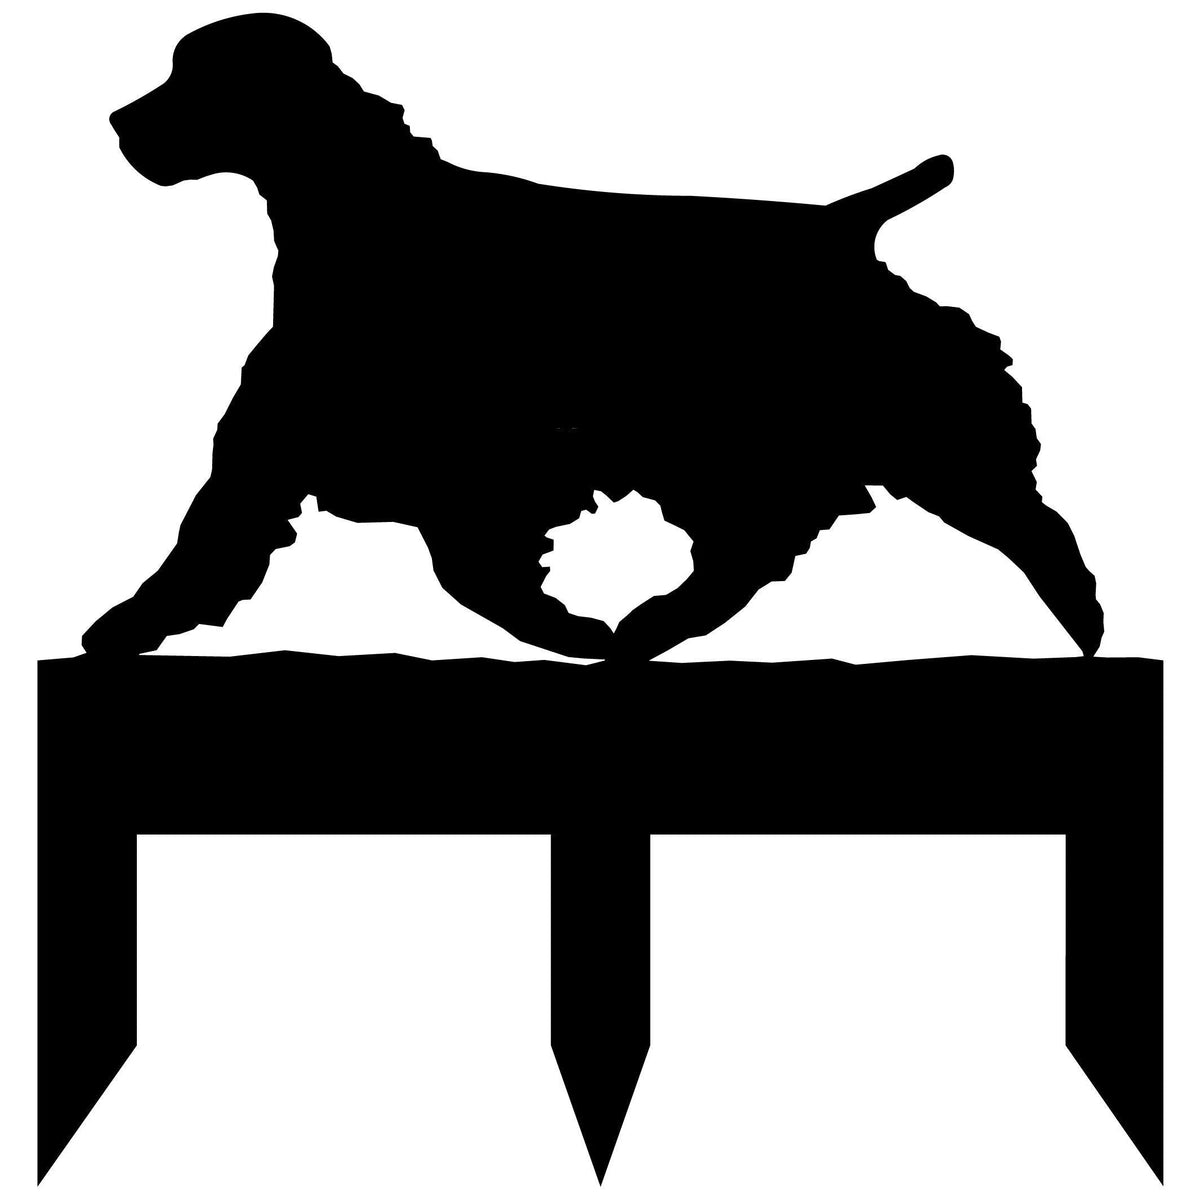 Springer Spaniel dog address stake